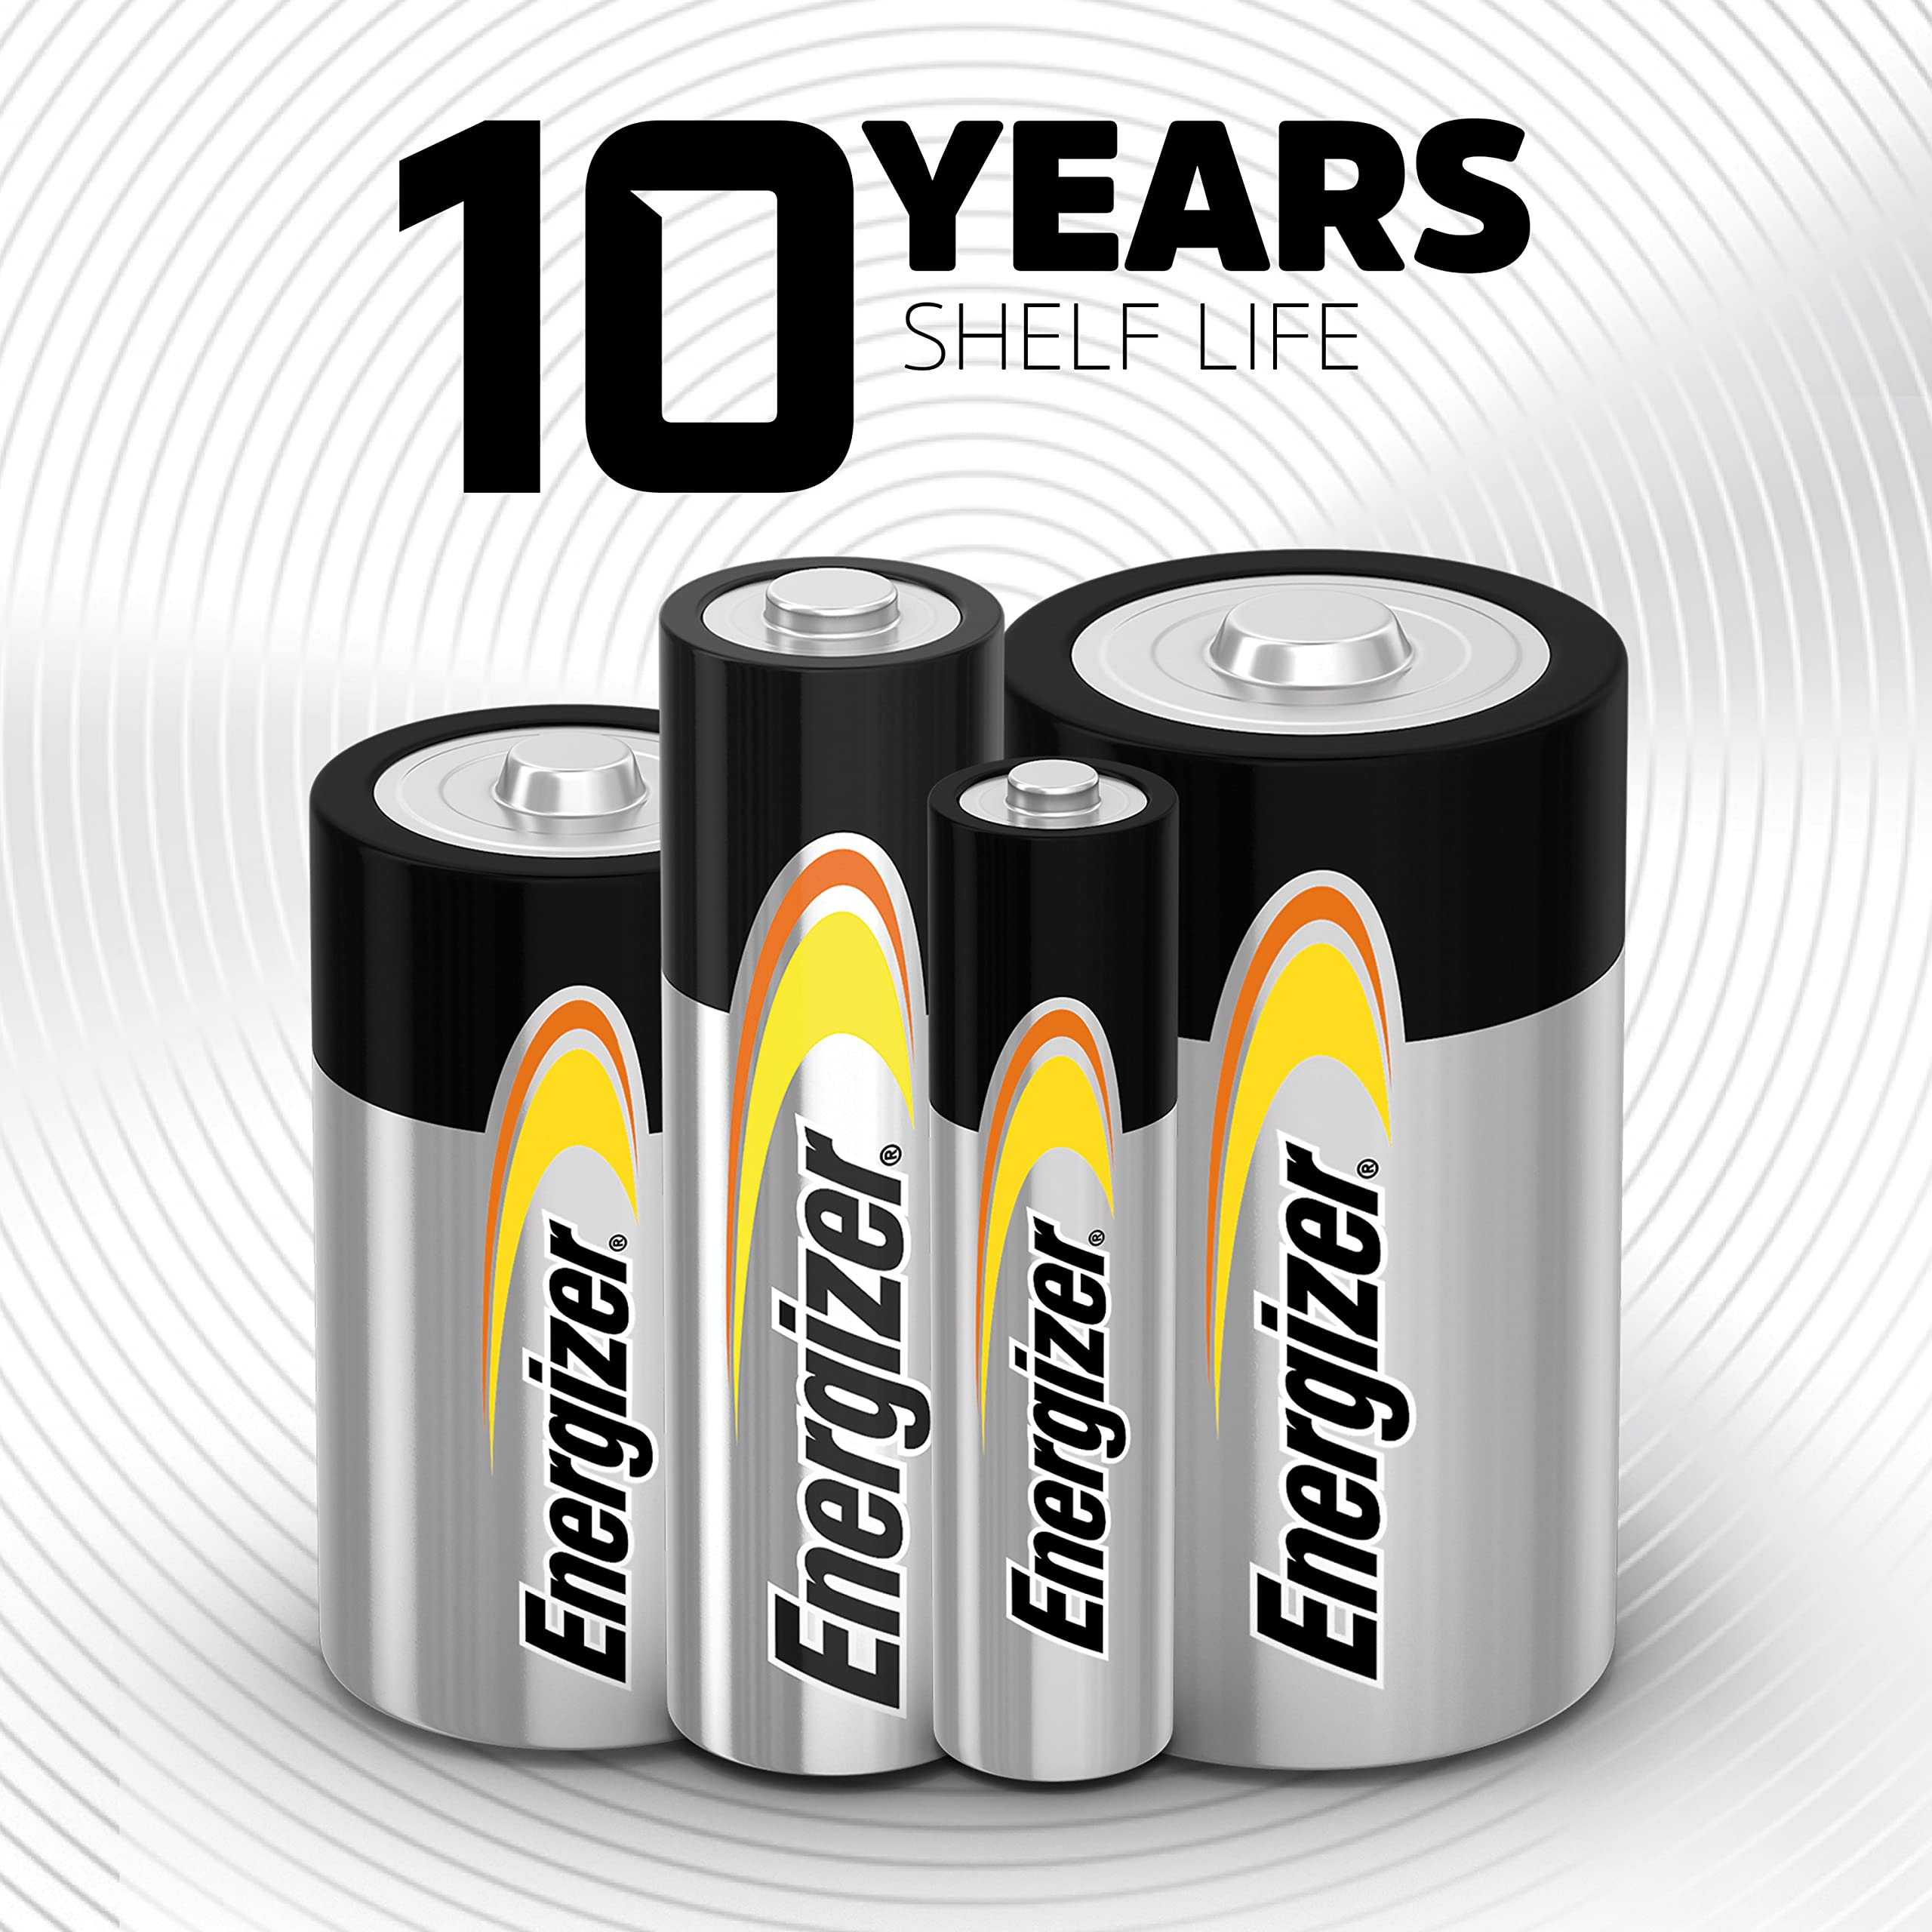 Energizer Alkaline Power 9 Volt Batteries (8 Pack), Long-Lasting Alkaline 9V Batteries - Packaging May Vary